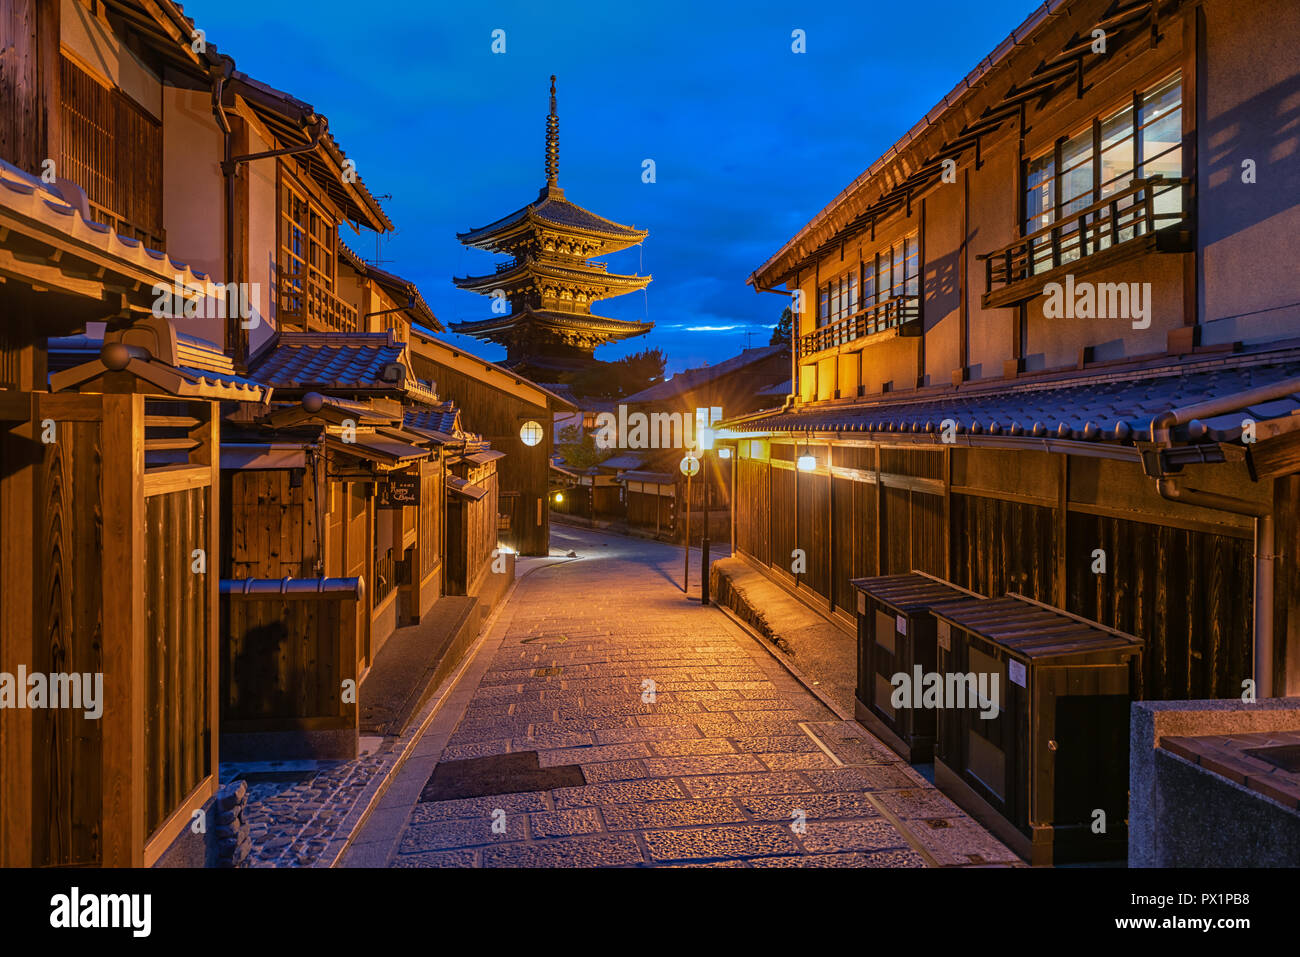 Kyoto - Giappone Yasaka Pagoda Vecchia città giapponese Foto Stock